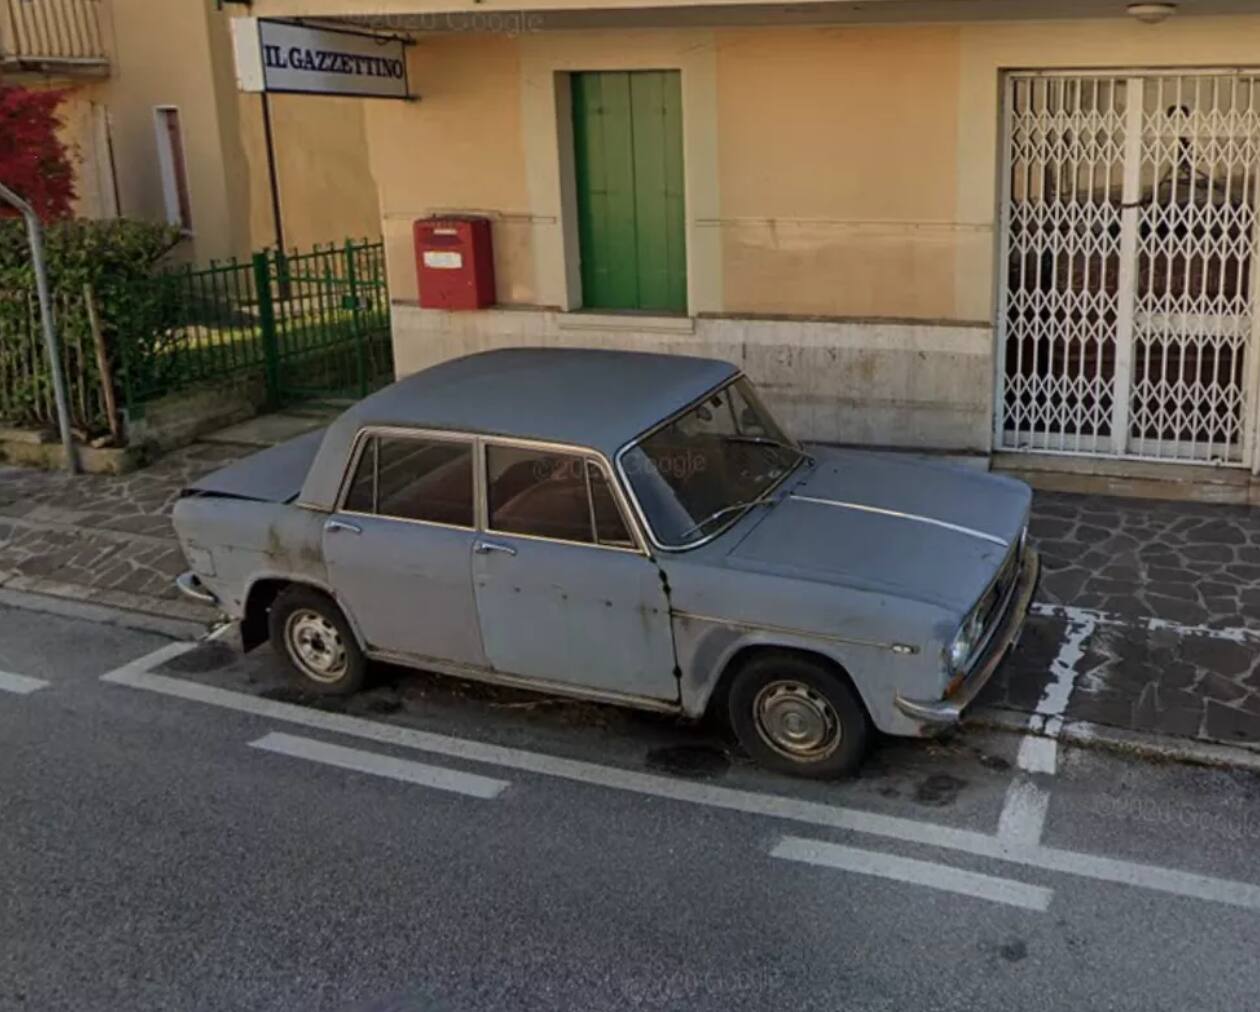 Carro que ficou quase 50 anos estacionado no mesmo lugar será exposto na Itália